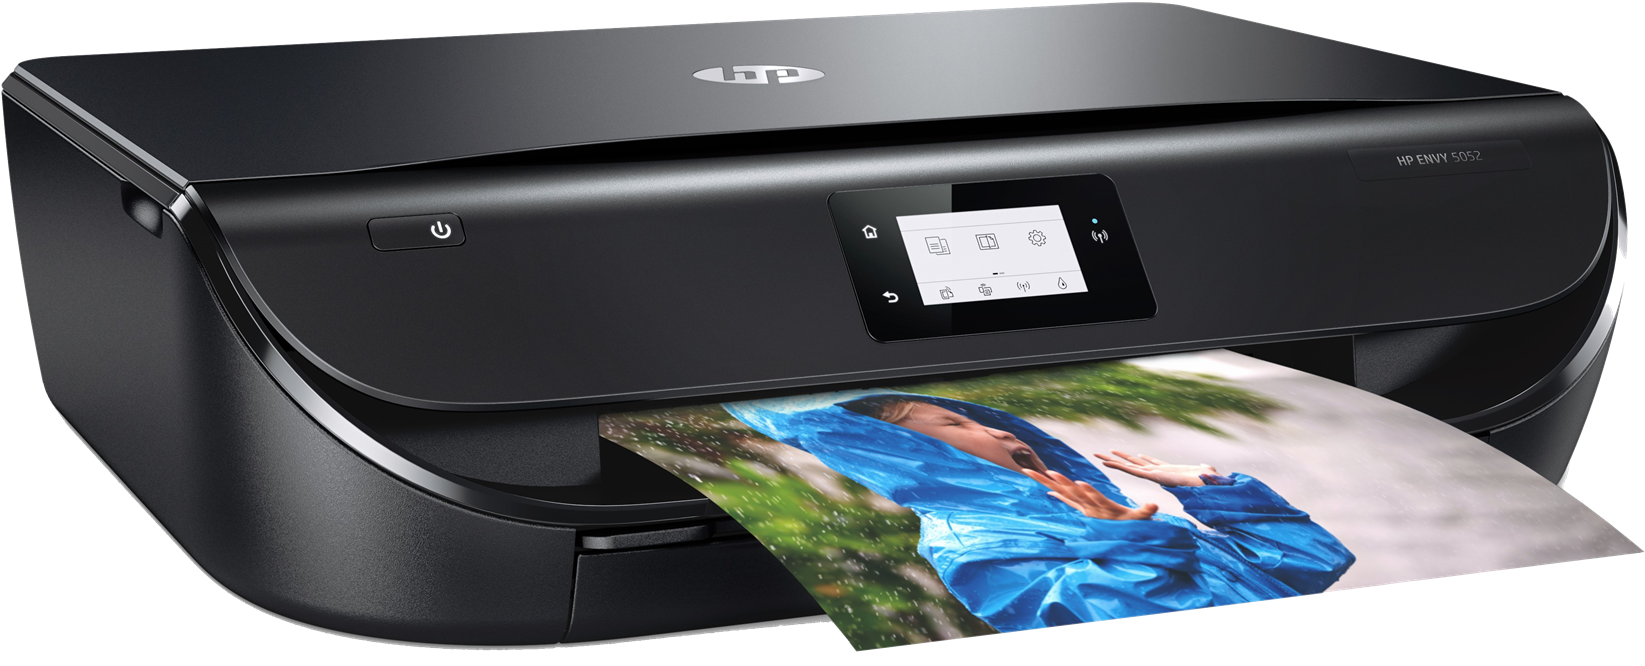 H P Envy Printer Printing Photo